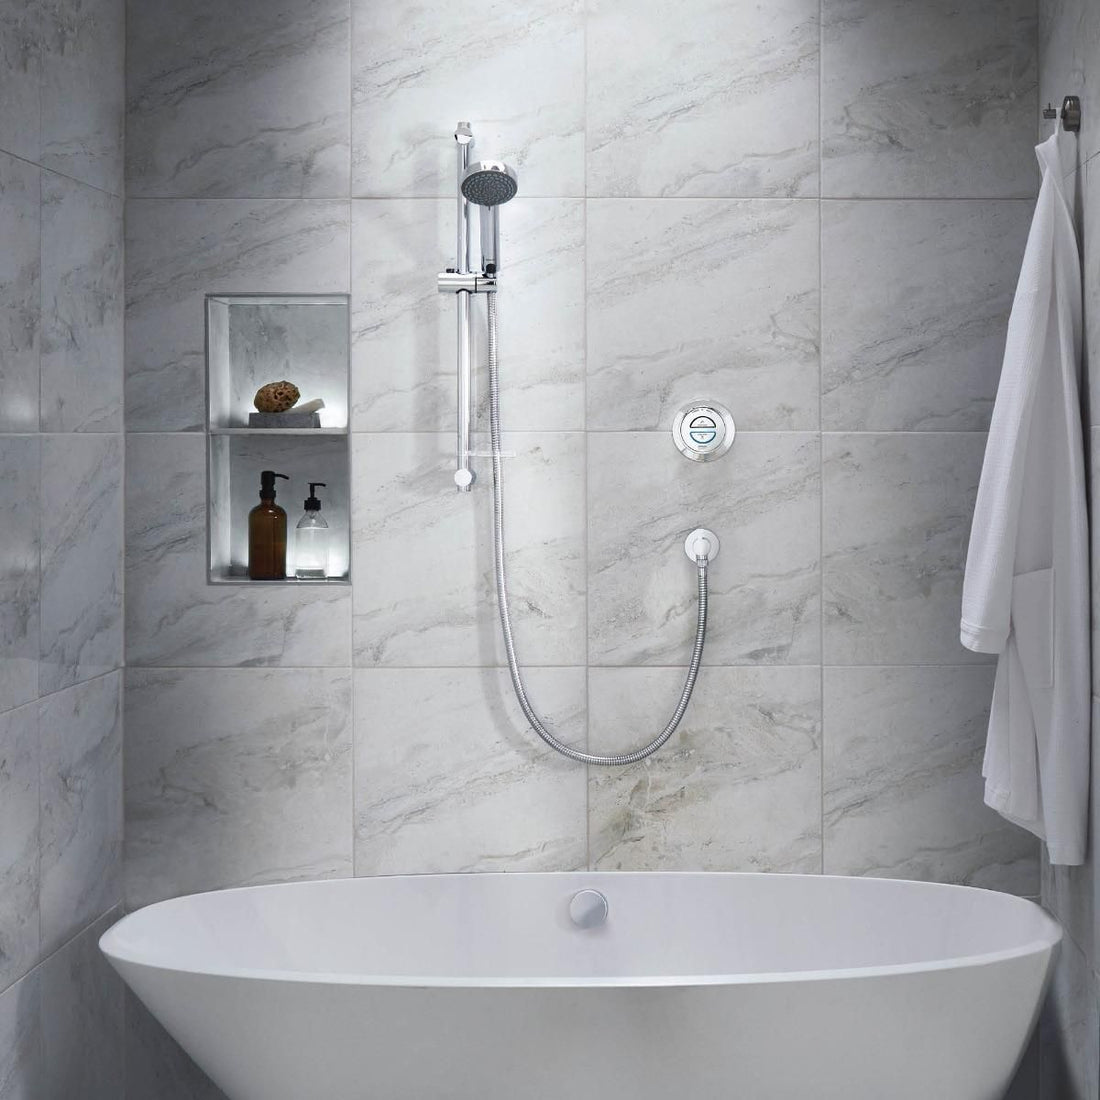 Aqualisa Quartz Classic Smart Shower - Concealed With Adjustable Head &amp; Bath Overflow Filler against white panel wall QZD.A1.BV.DVBTX.20